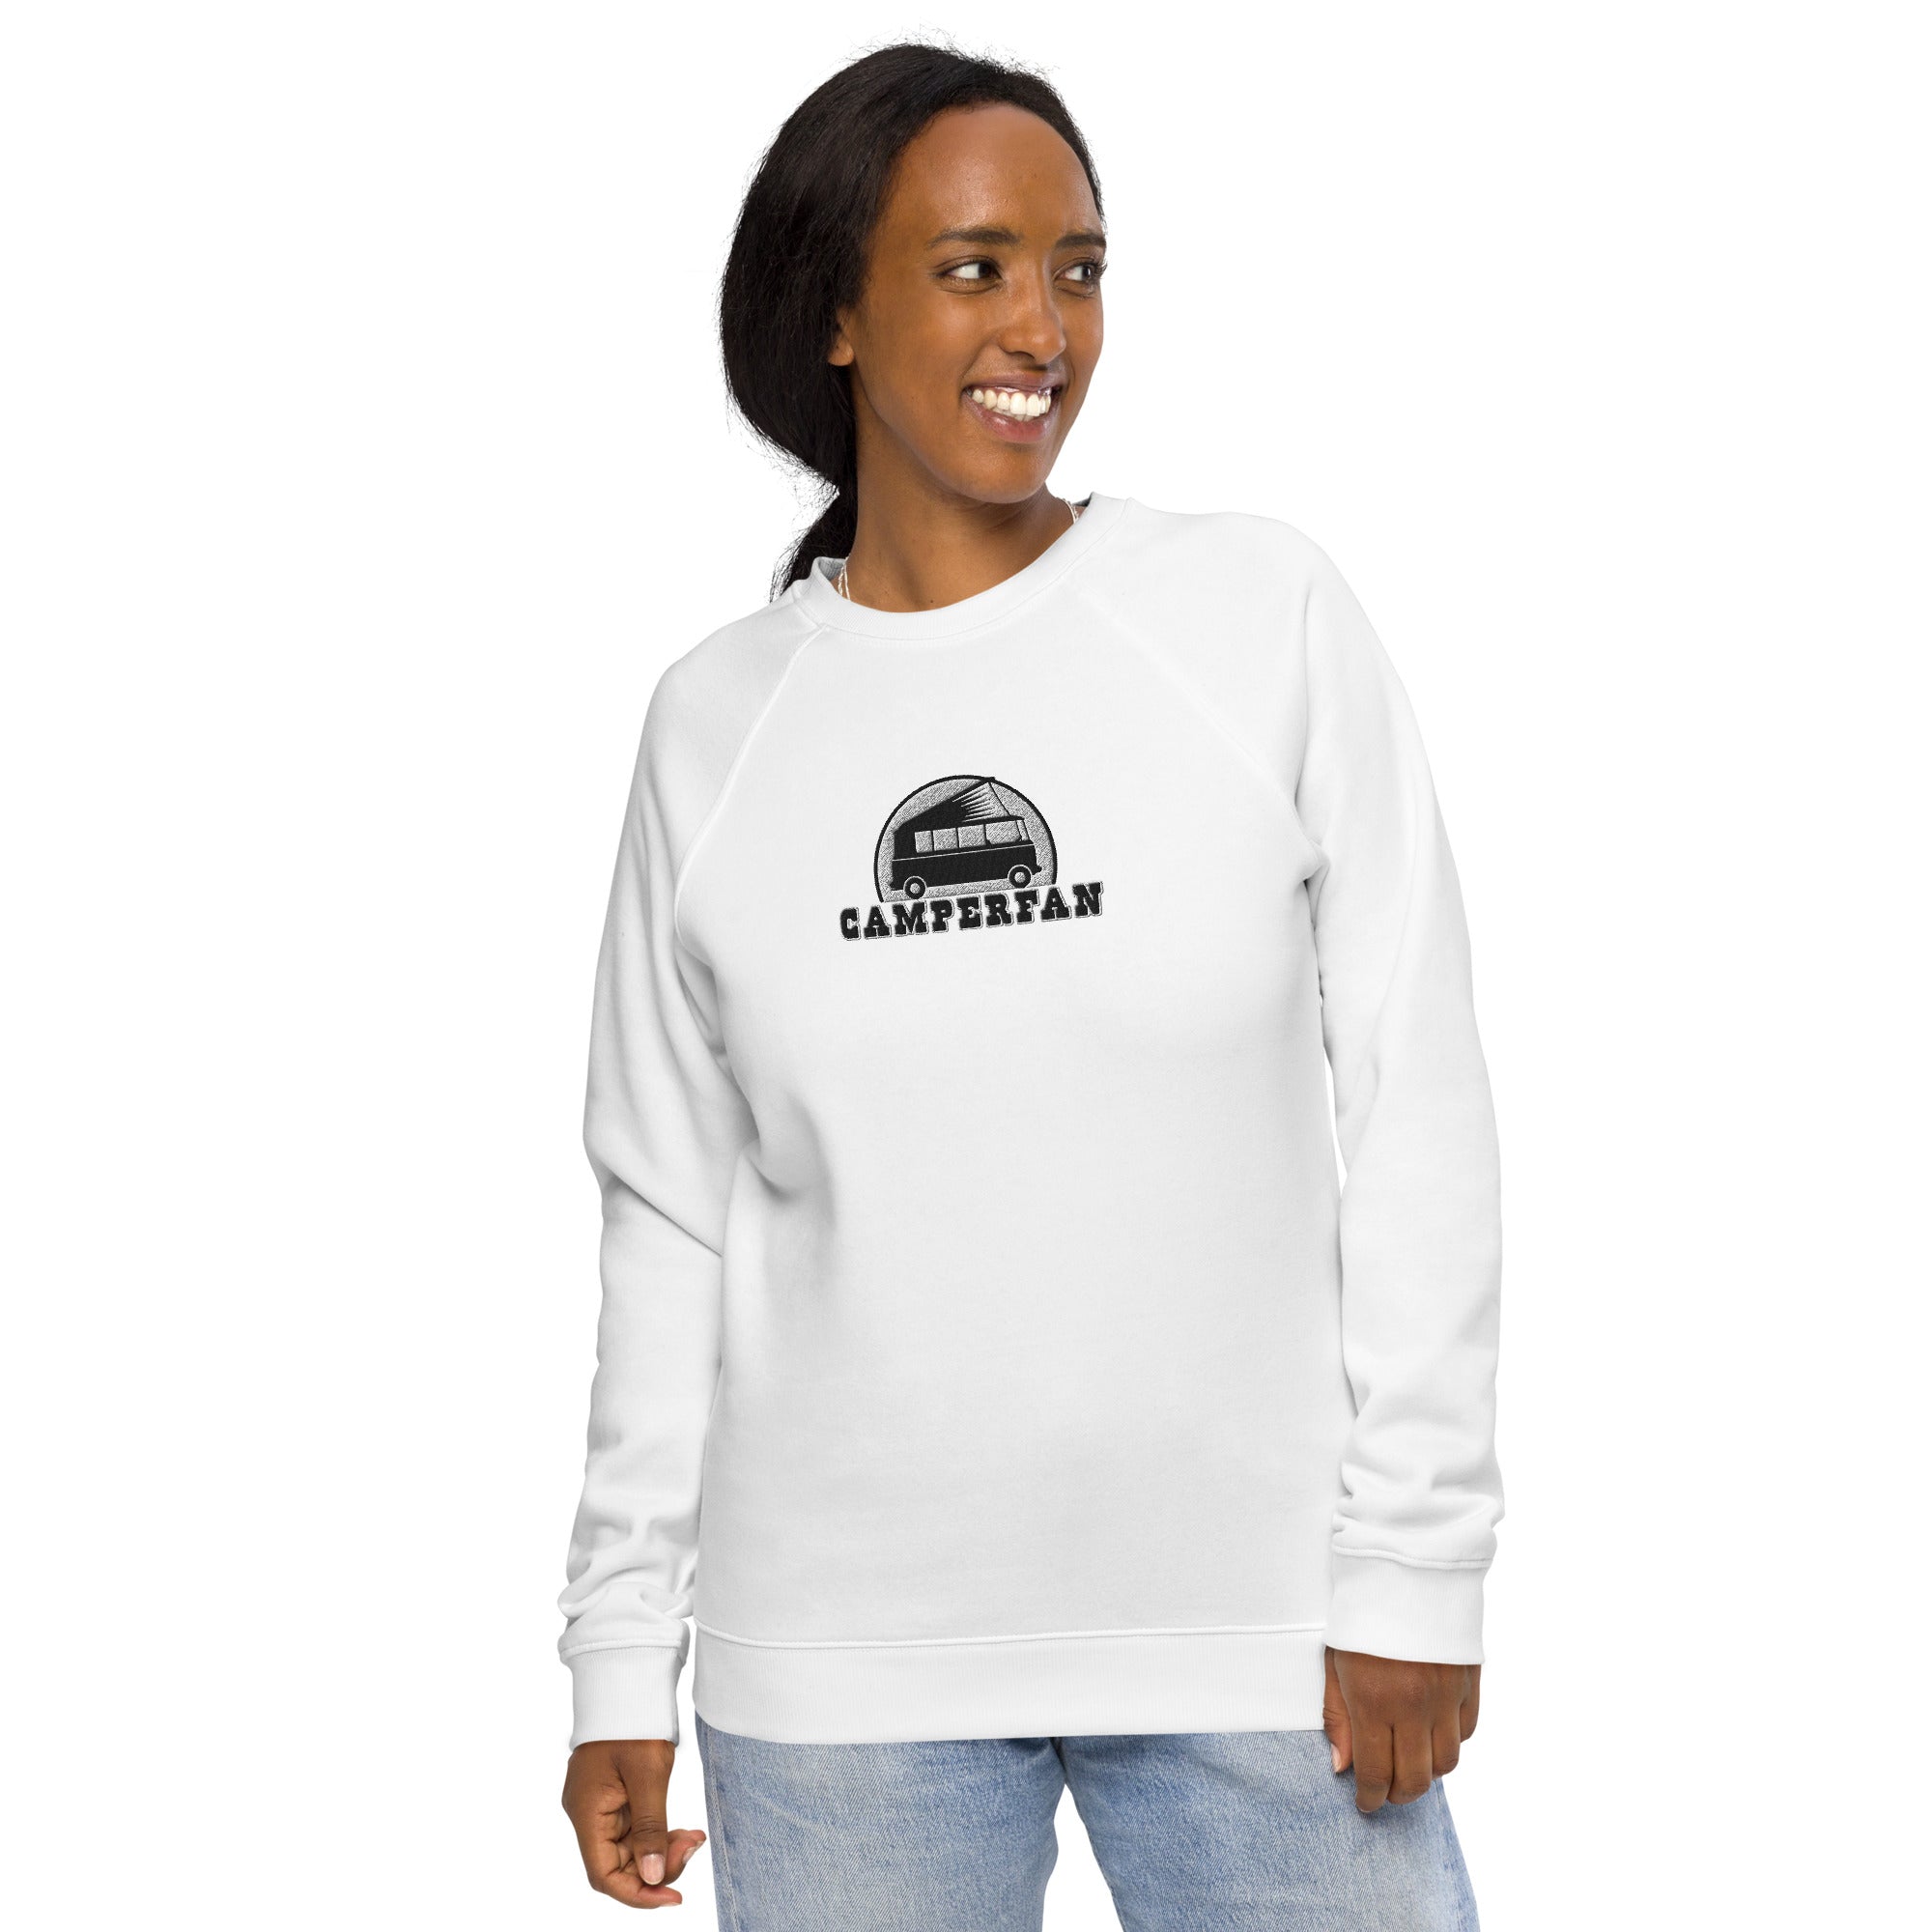 Unisex organic raglan sweatshirt Small Camperfan large black/white embroidered pattern